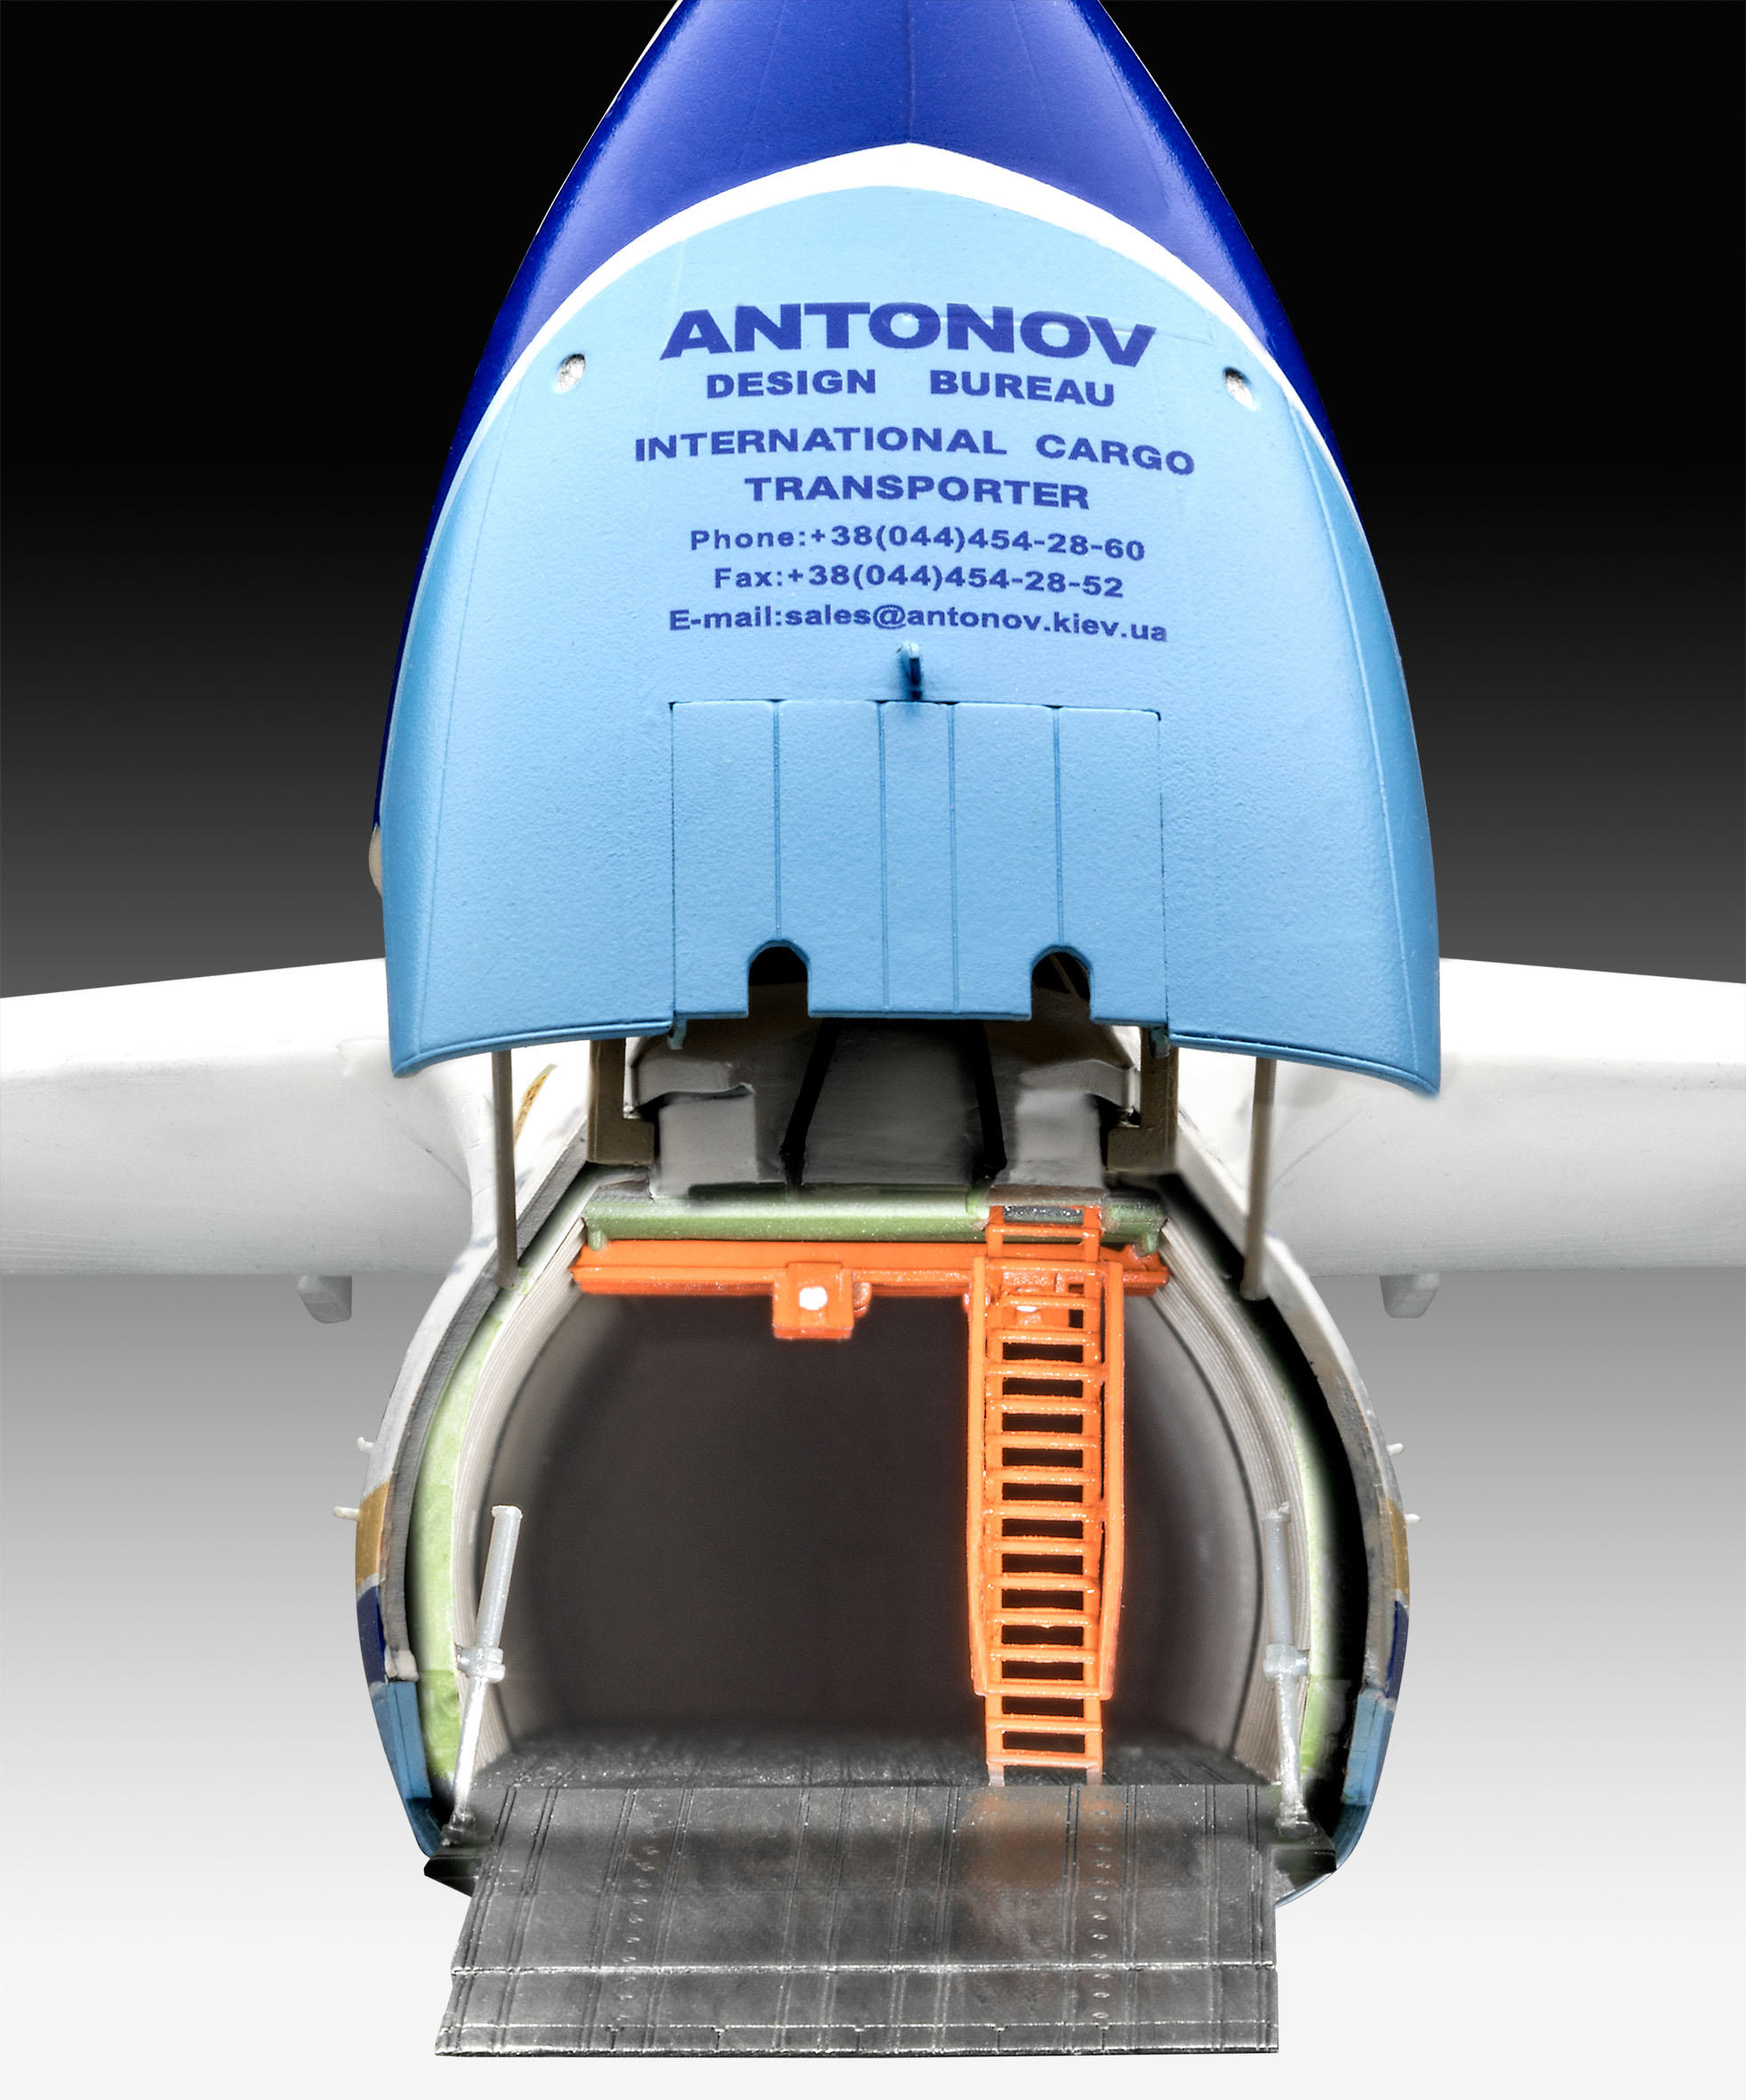 Antonov An-225 Mrija - 04958